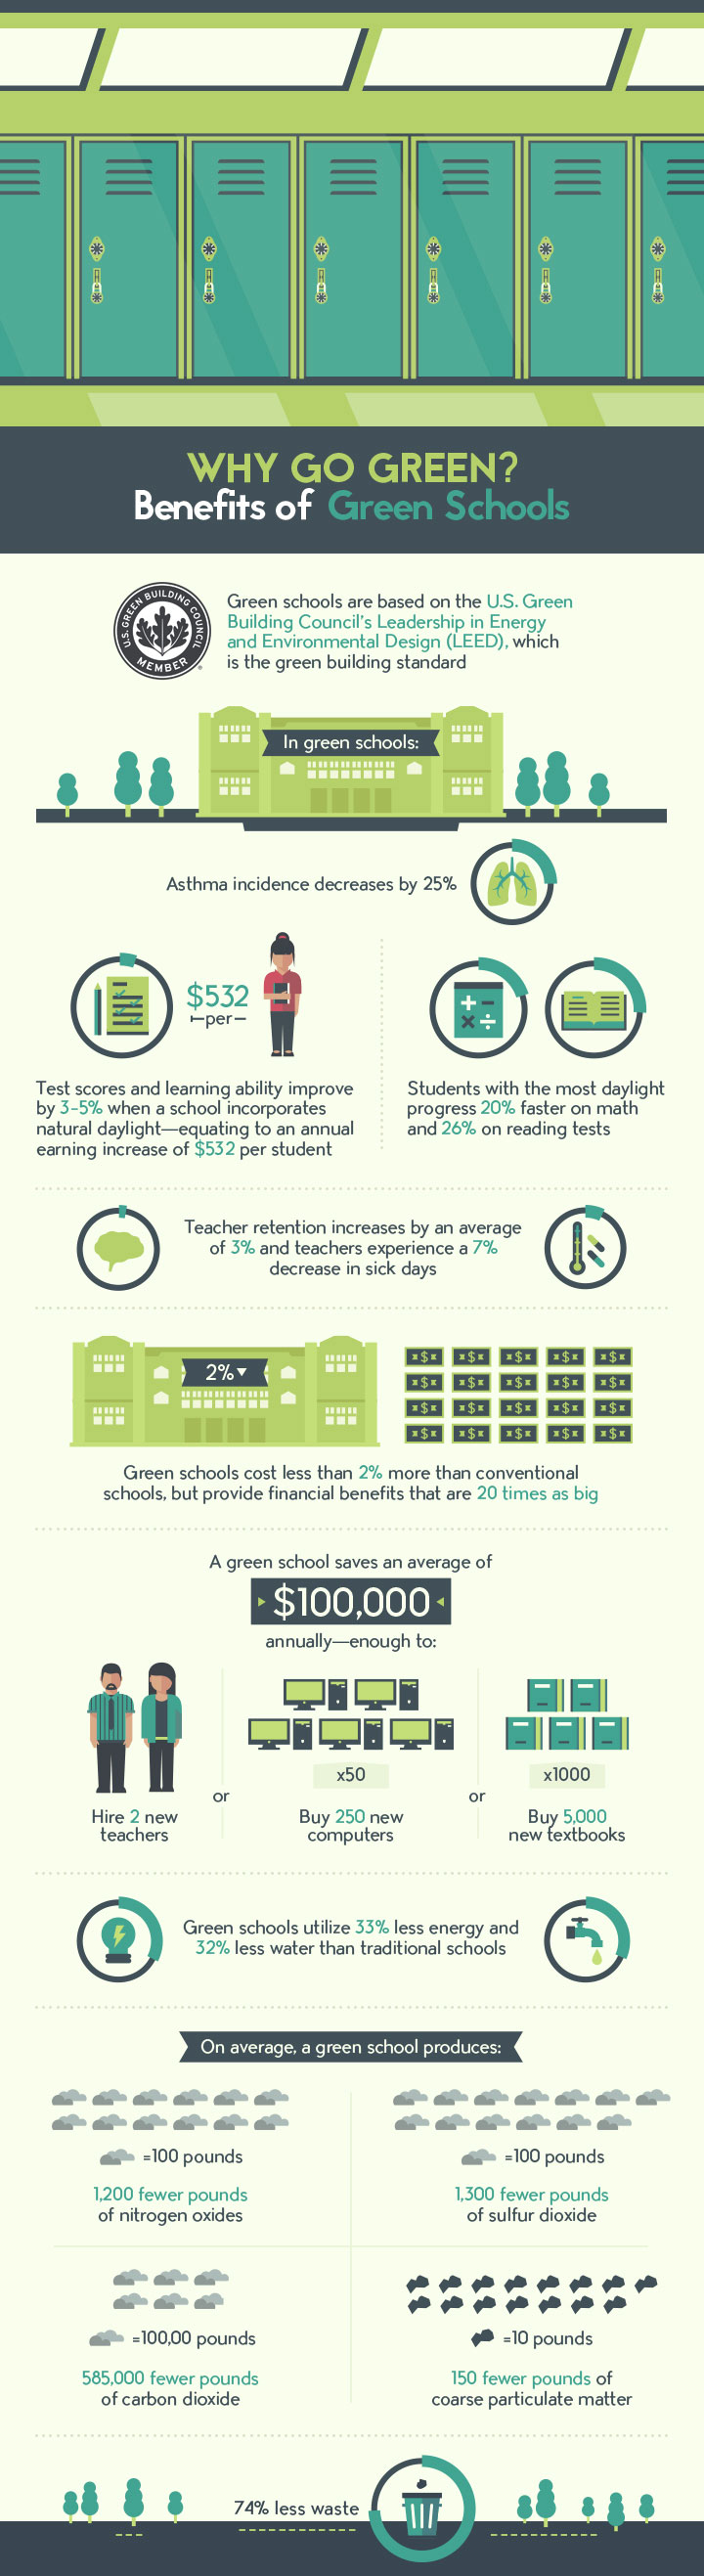 Benefits of a Green School